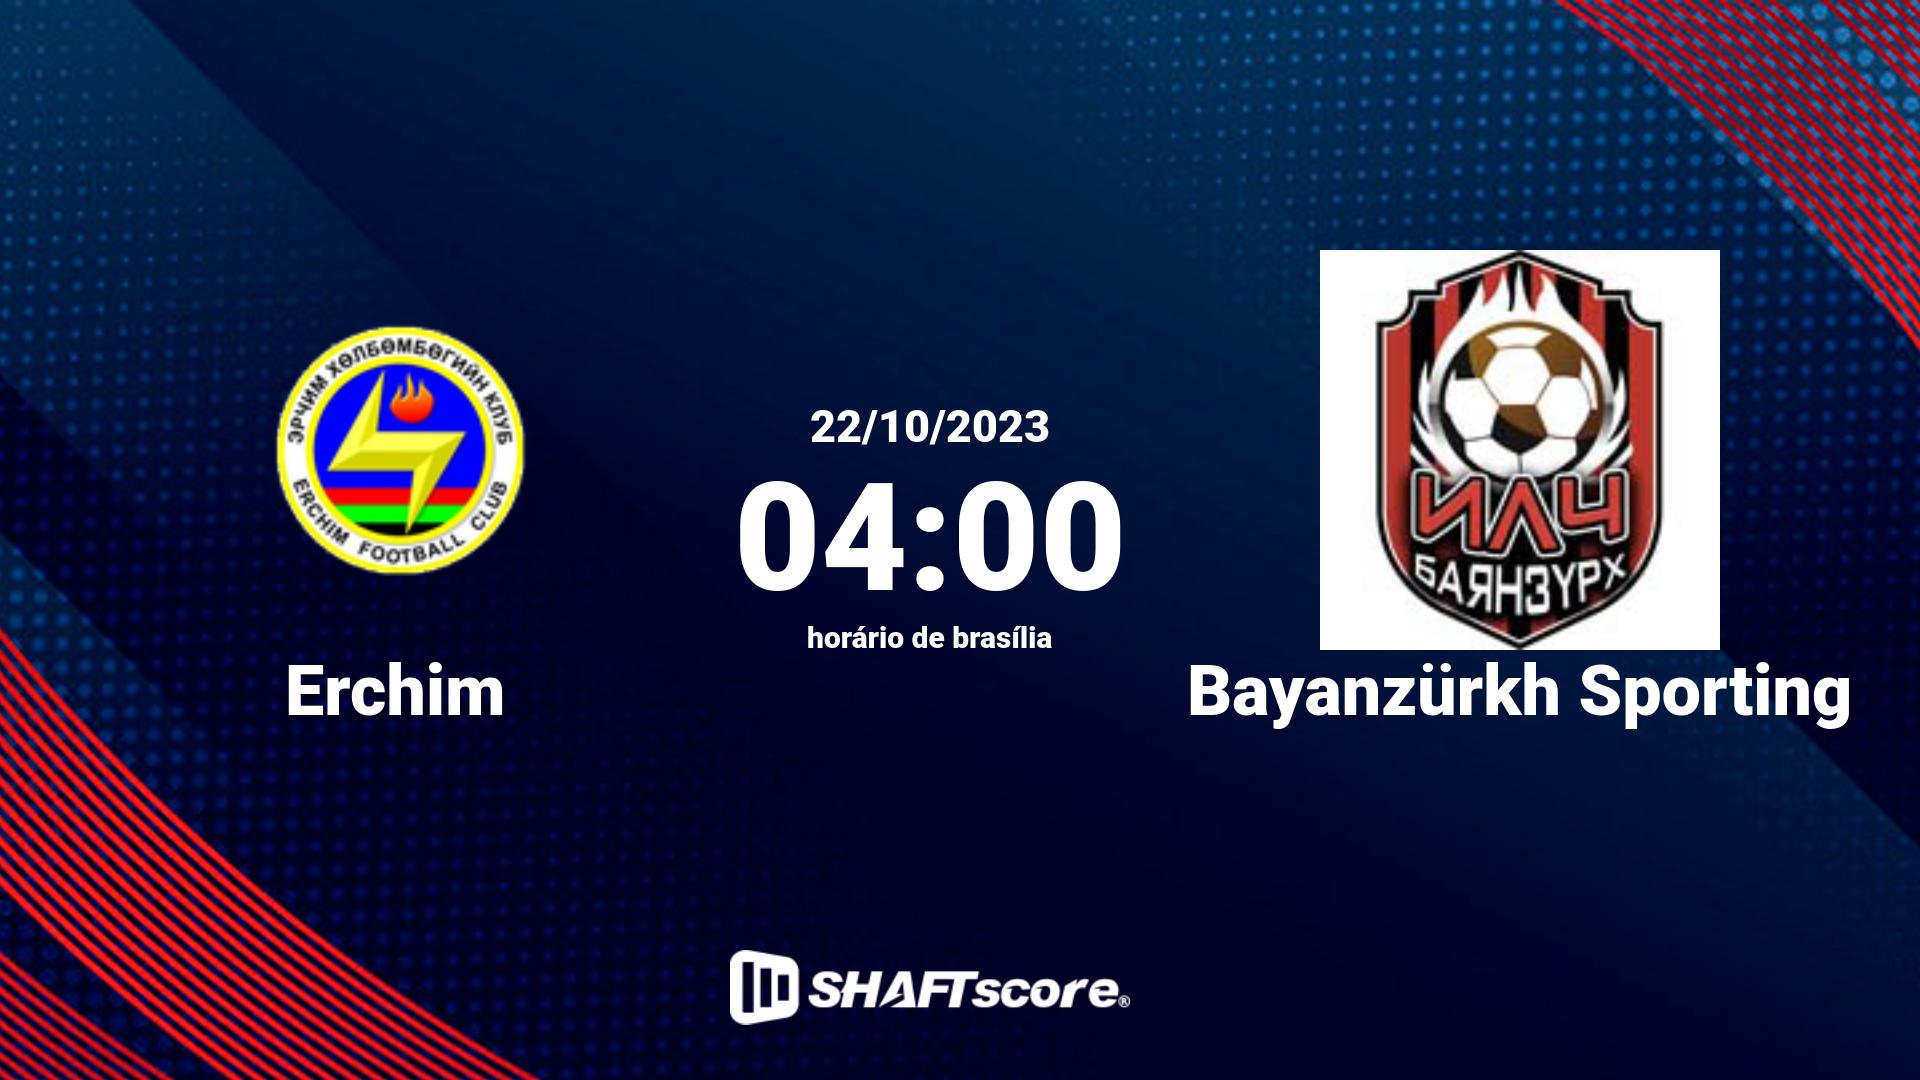 Estatísticas do jogo Erchim vs Bayanzürkh Sporting 22.10 04:00